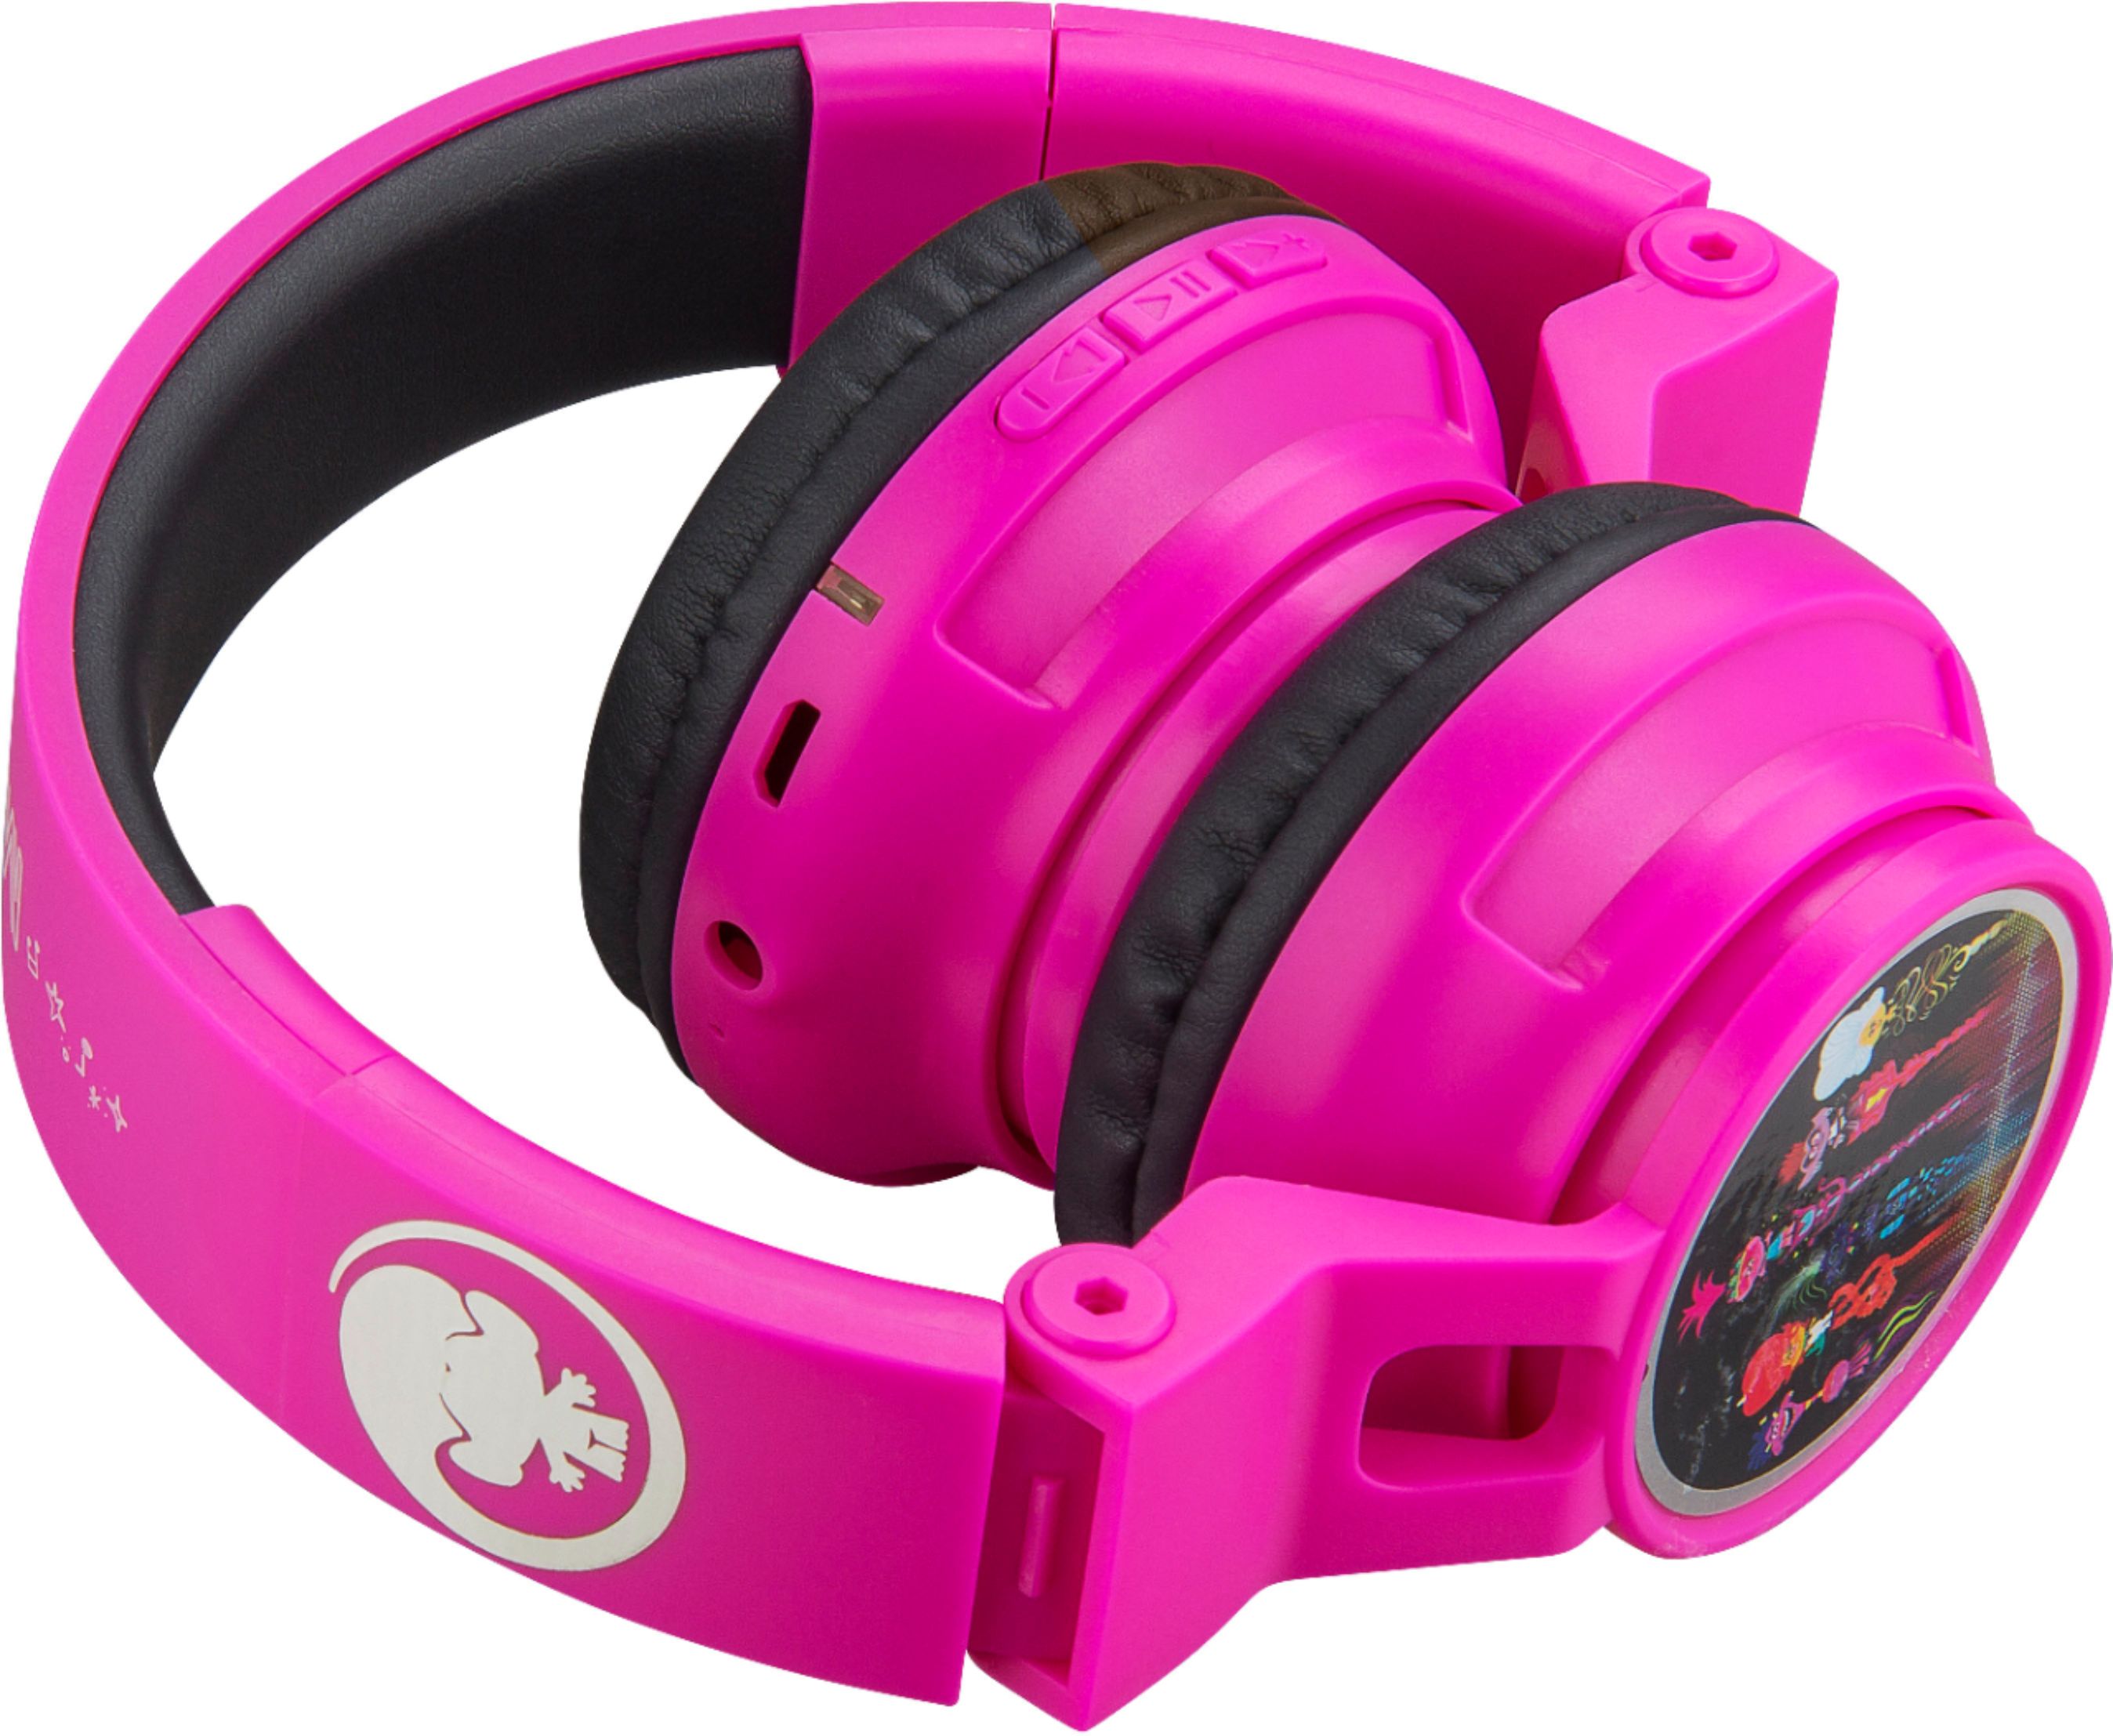 Trolls Over-the-Ear Pink/Black Tour Wireless Buy: Best World Headphones